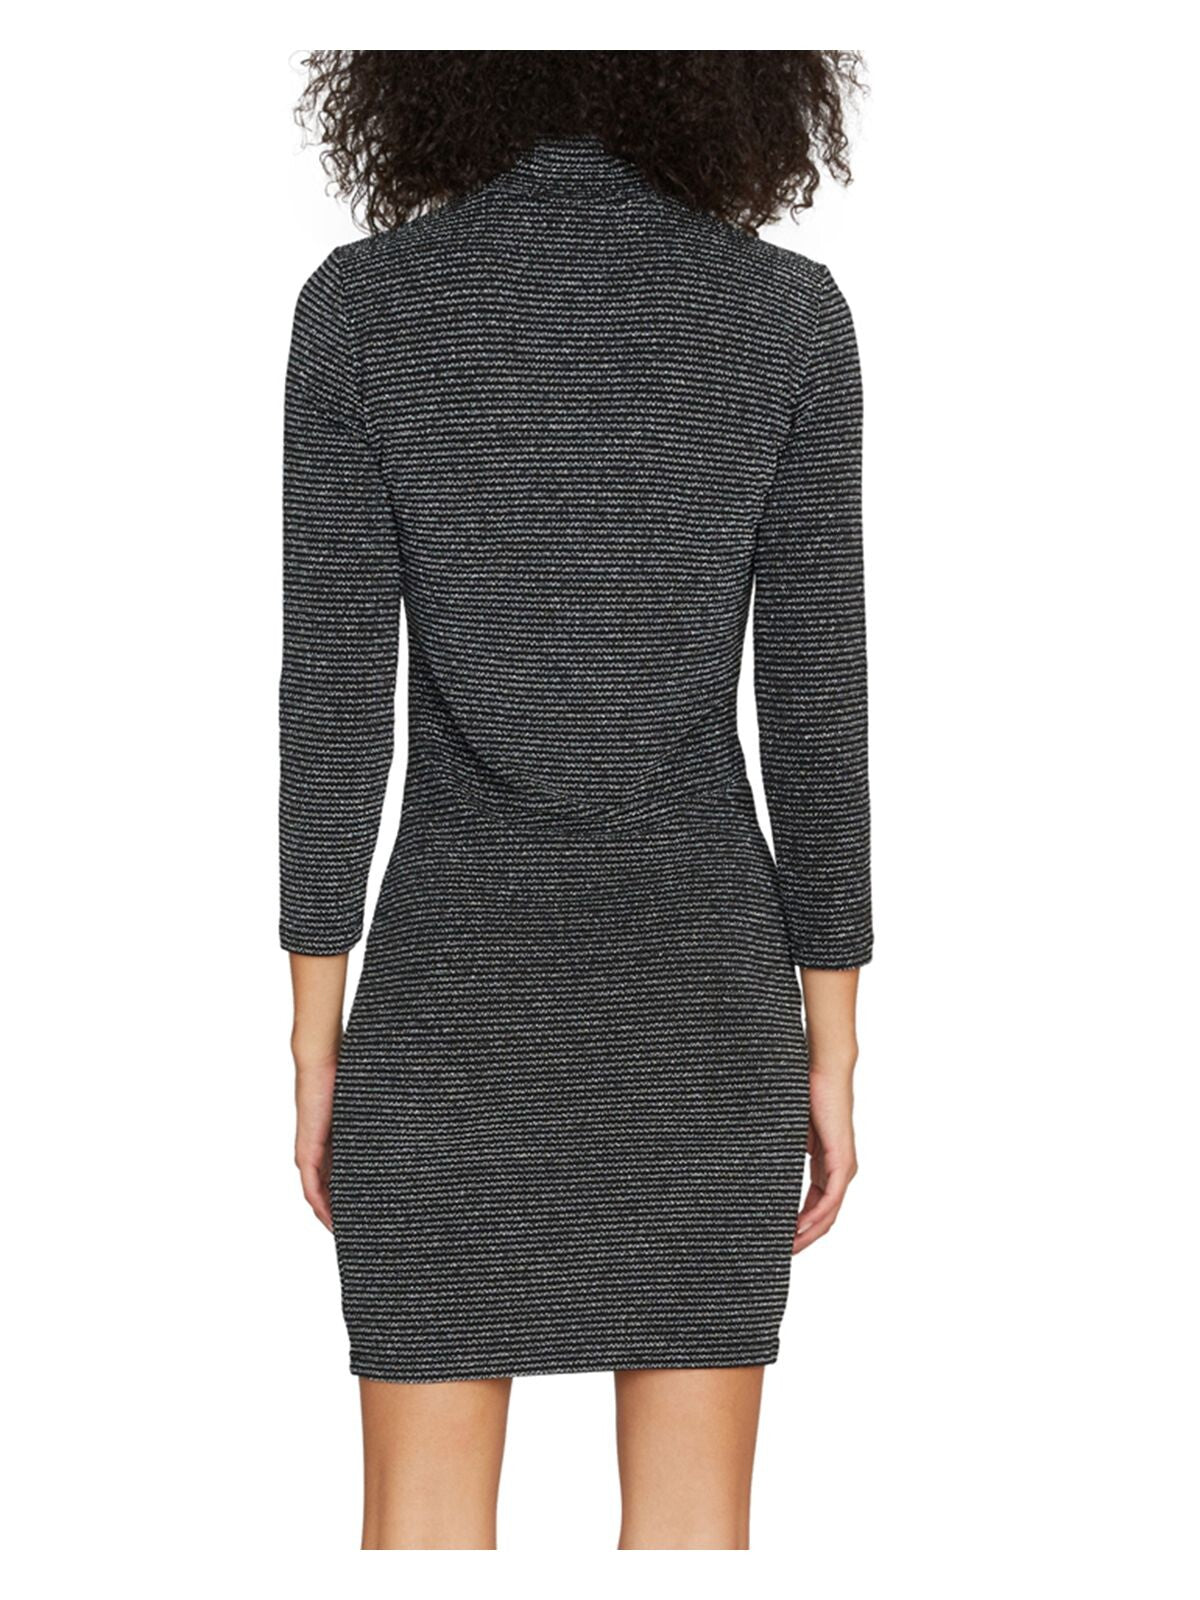 SANCTUARY Womens Black Glitter Sweater Striped 3/4 Sleeve Turtle Neck Short Party Sheath Dress Juniors XS